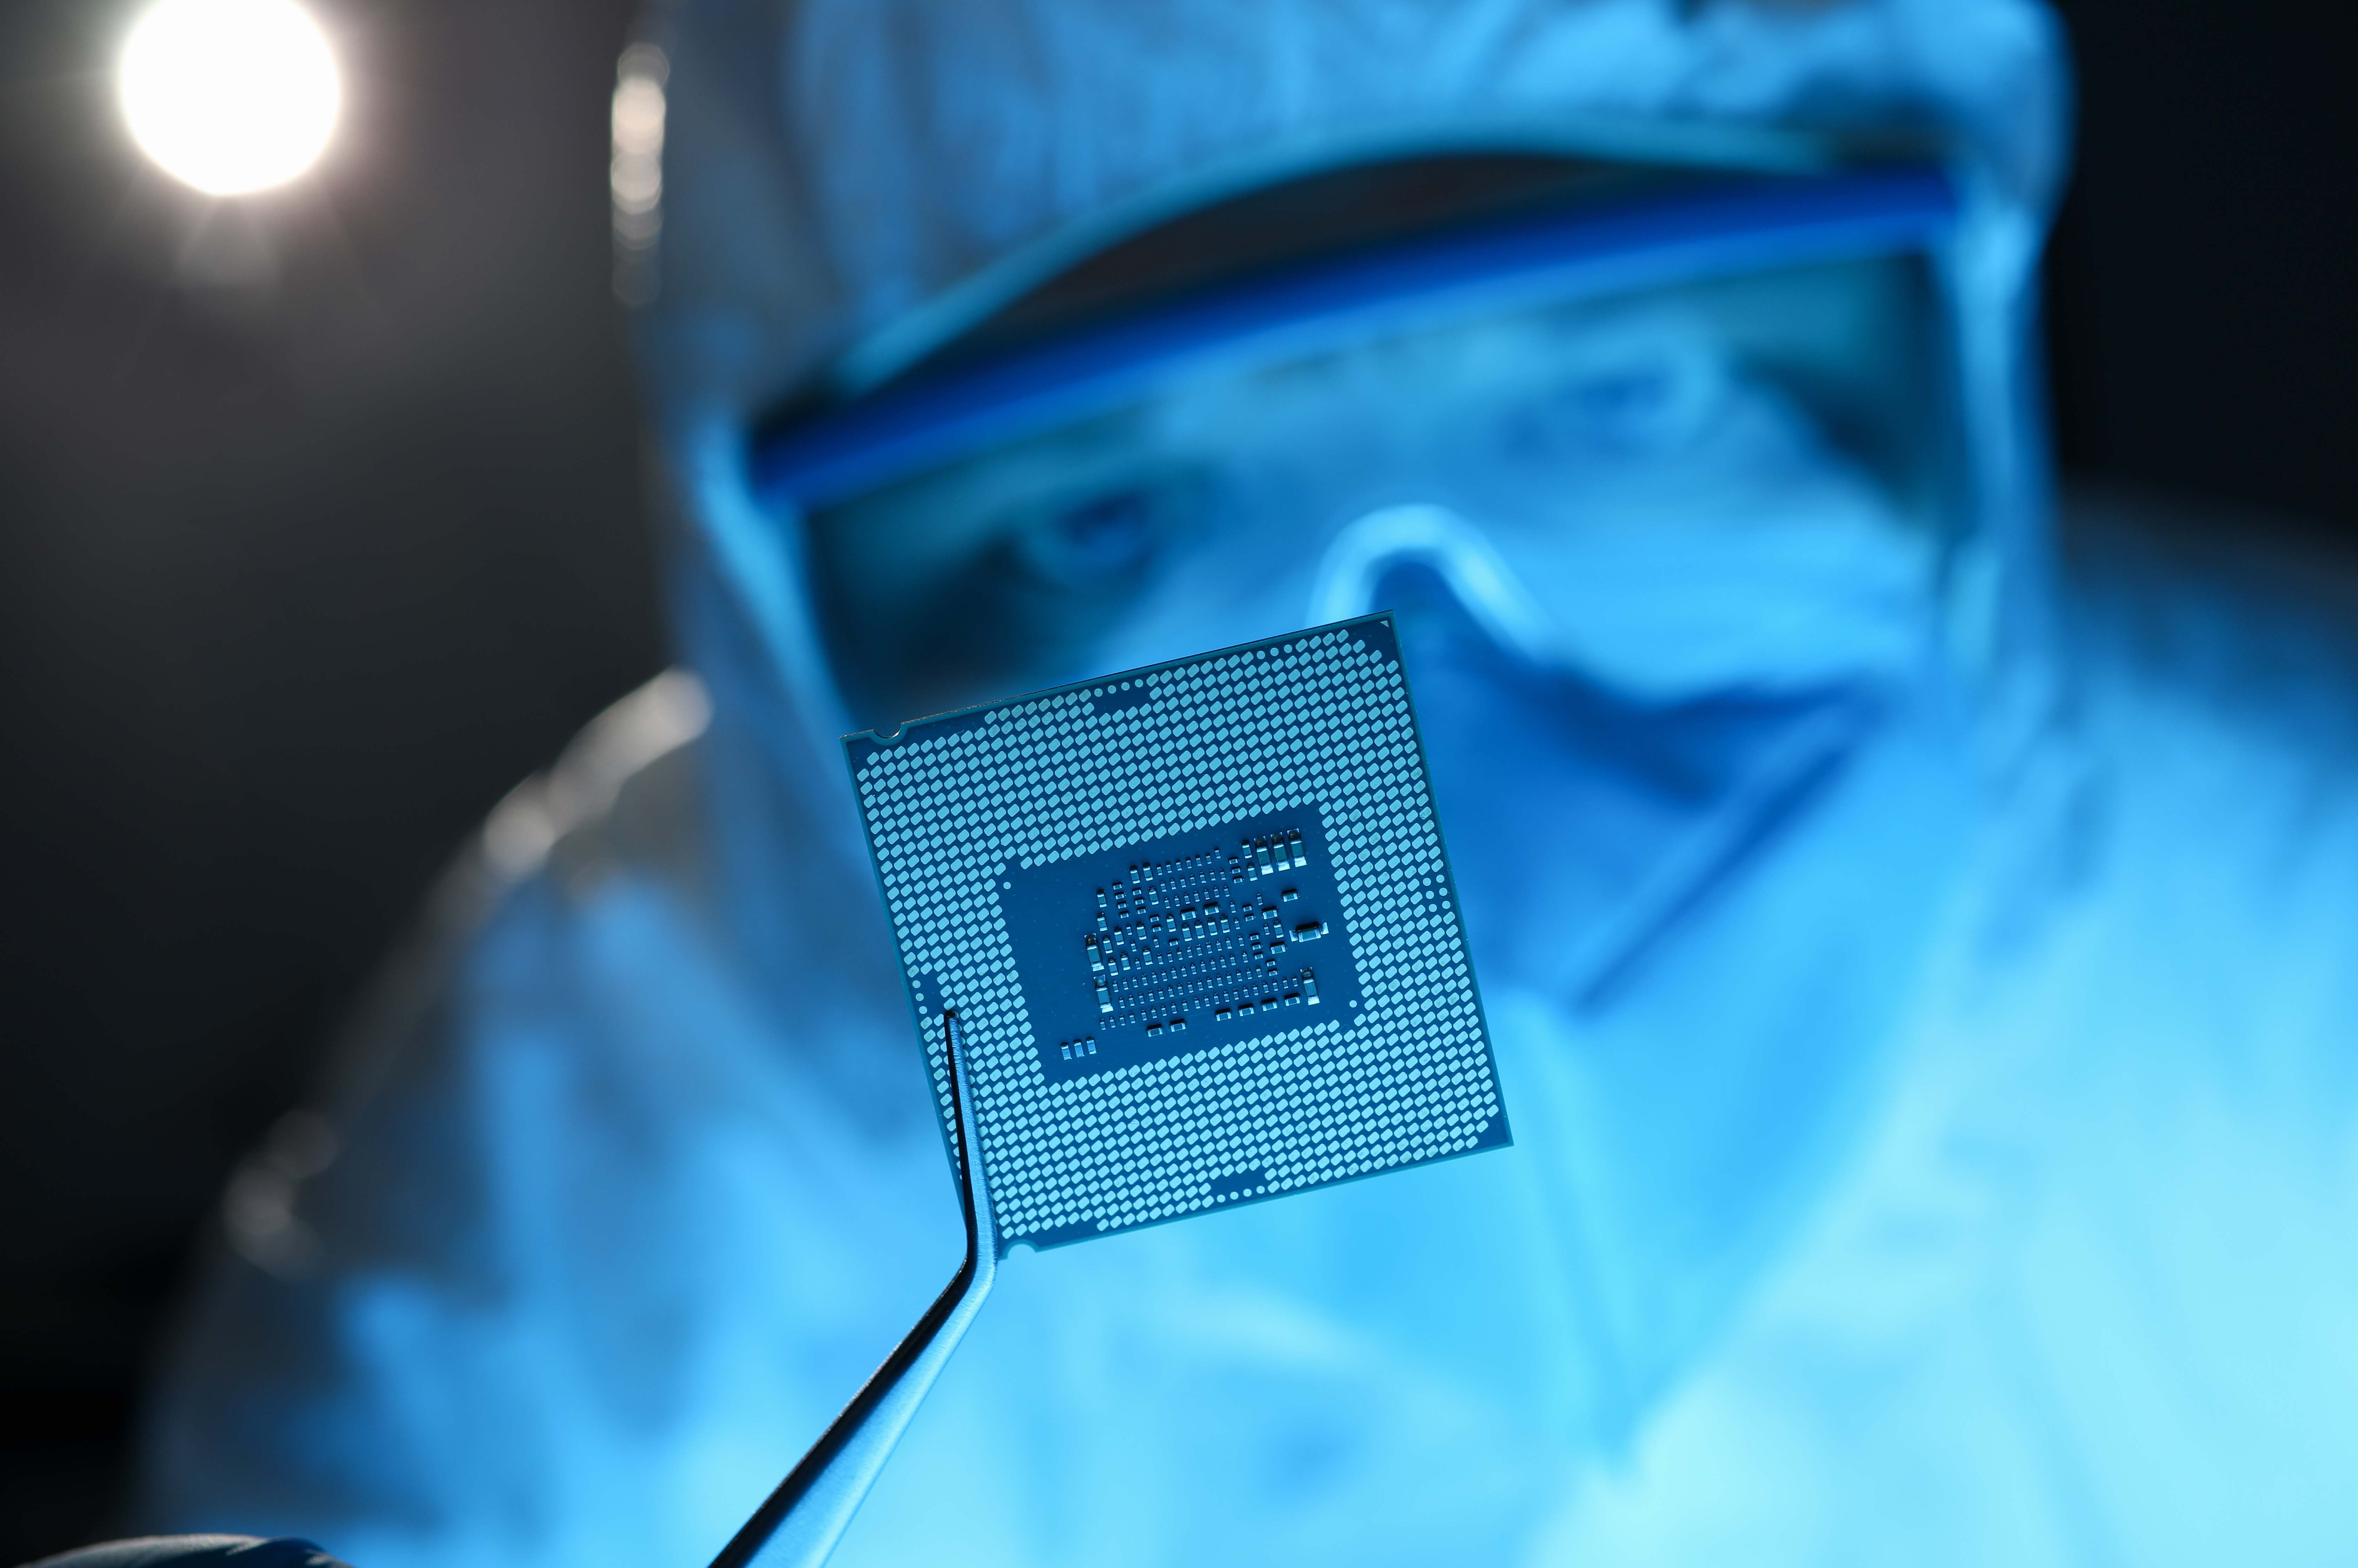 A close up of a micro processor